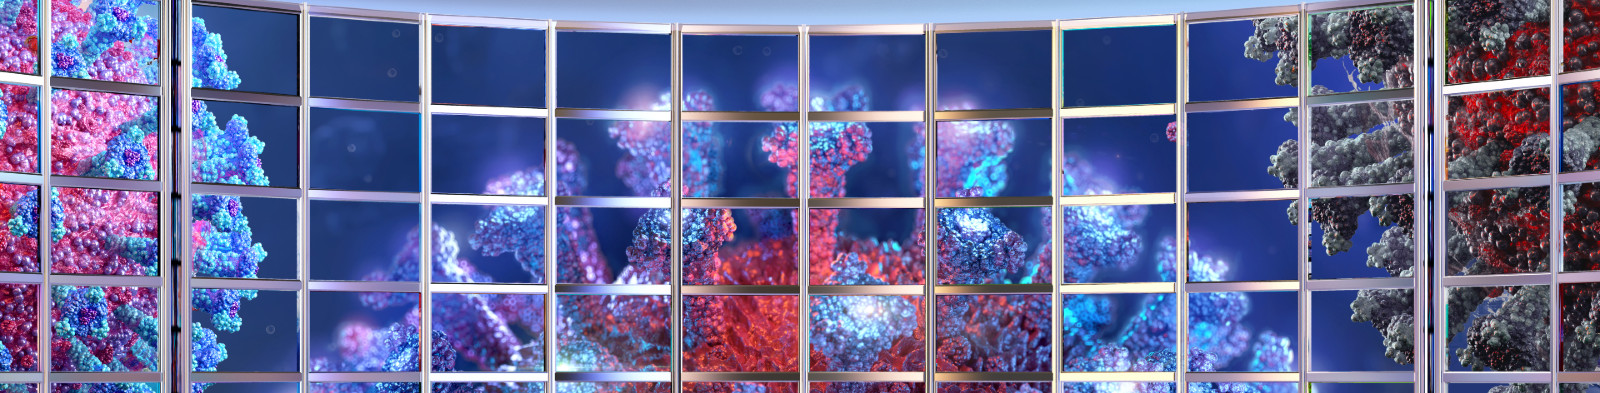 The SARS-CoV-2 virus on a bank of media screens